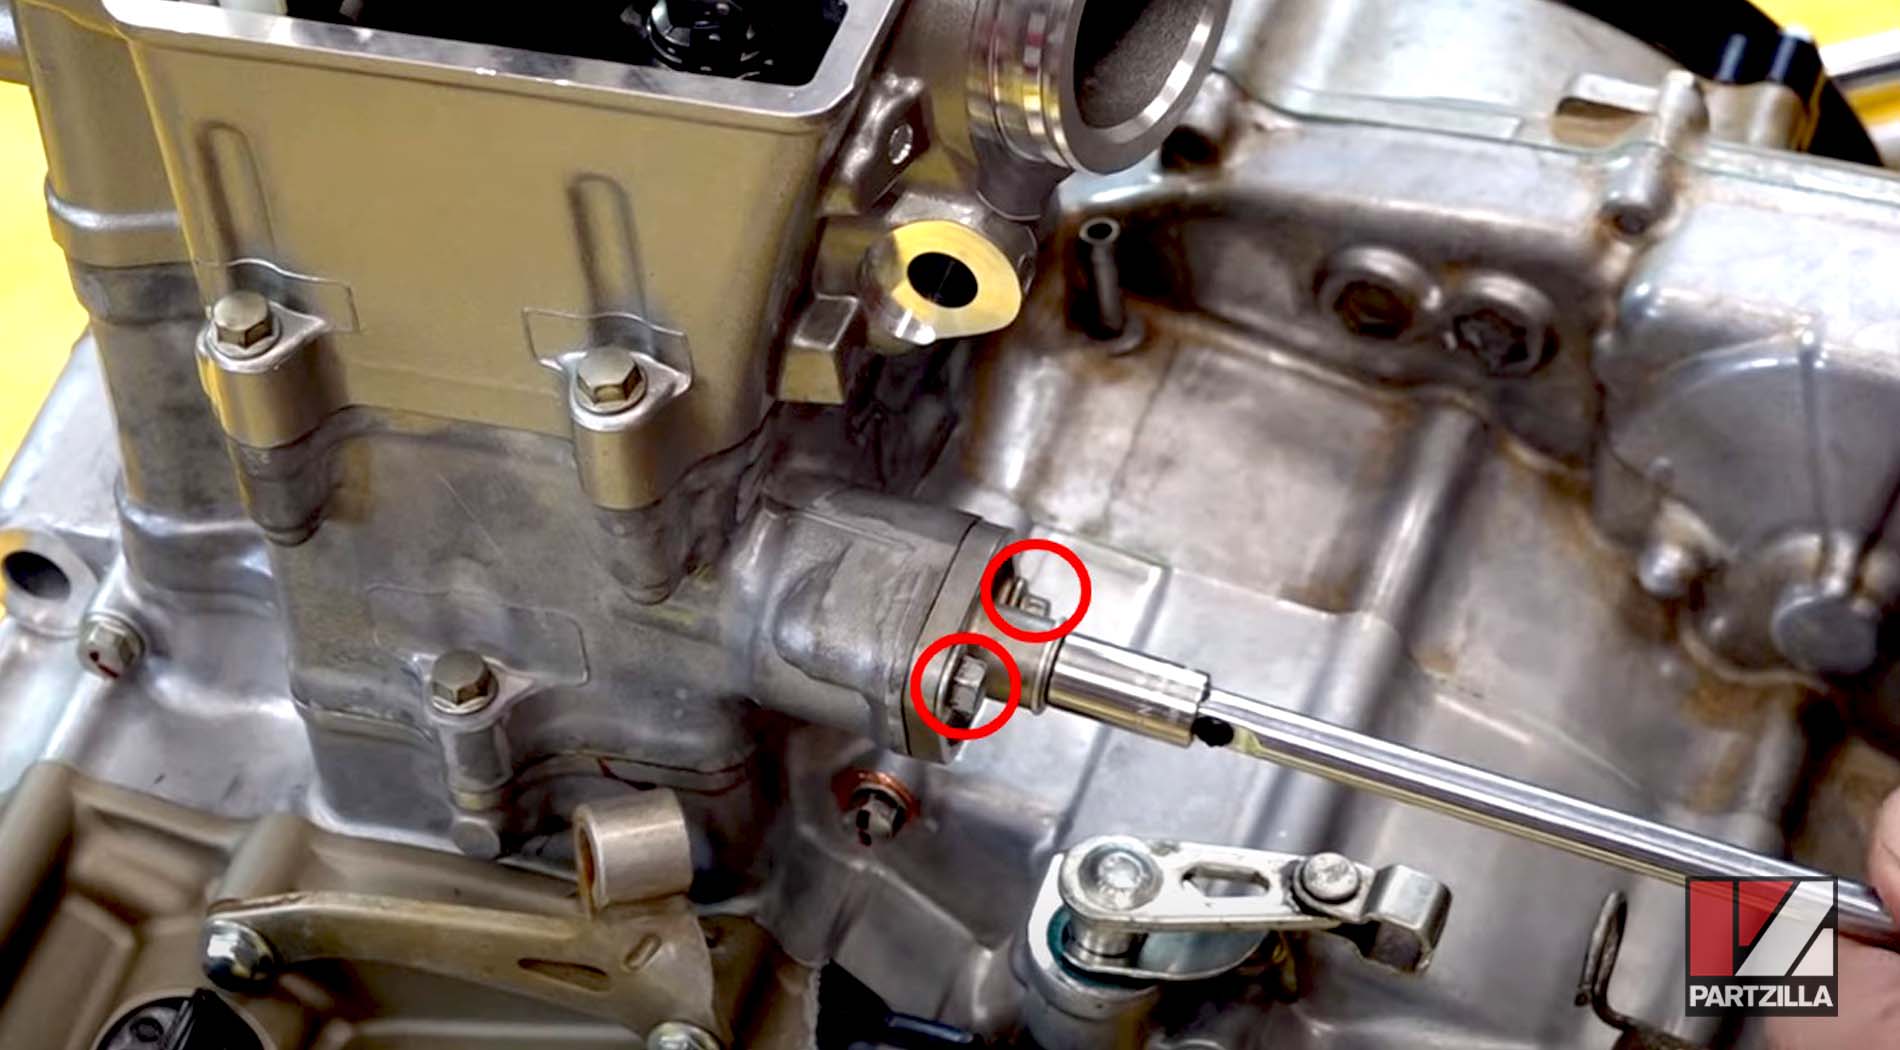 Honda CRF450 engine cam chain tensioner bolts